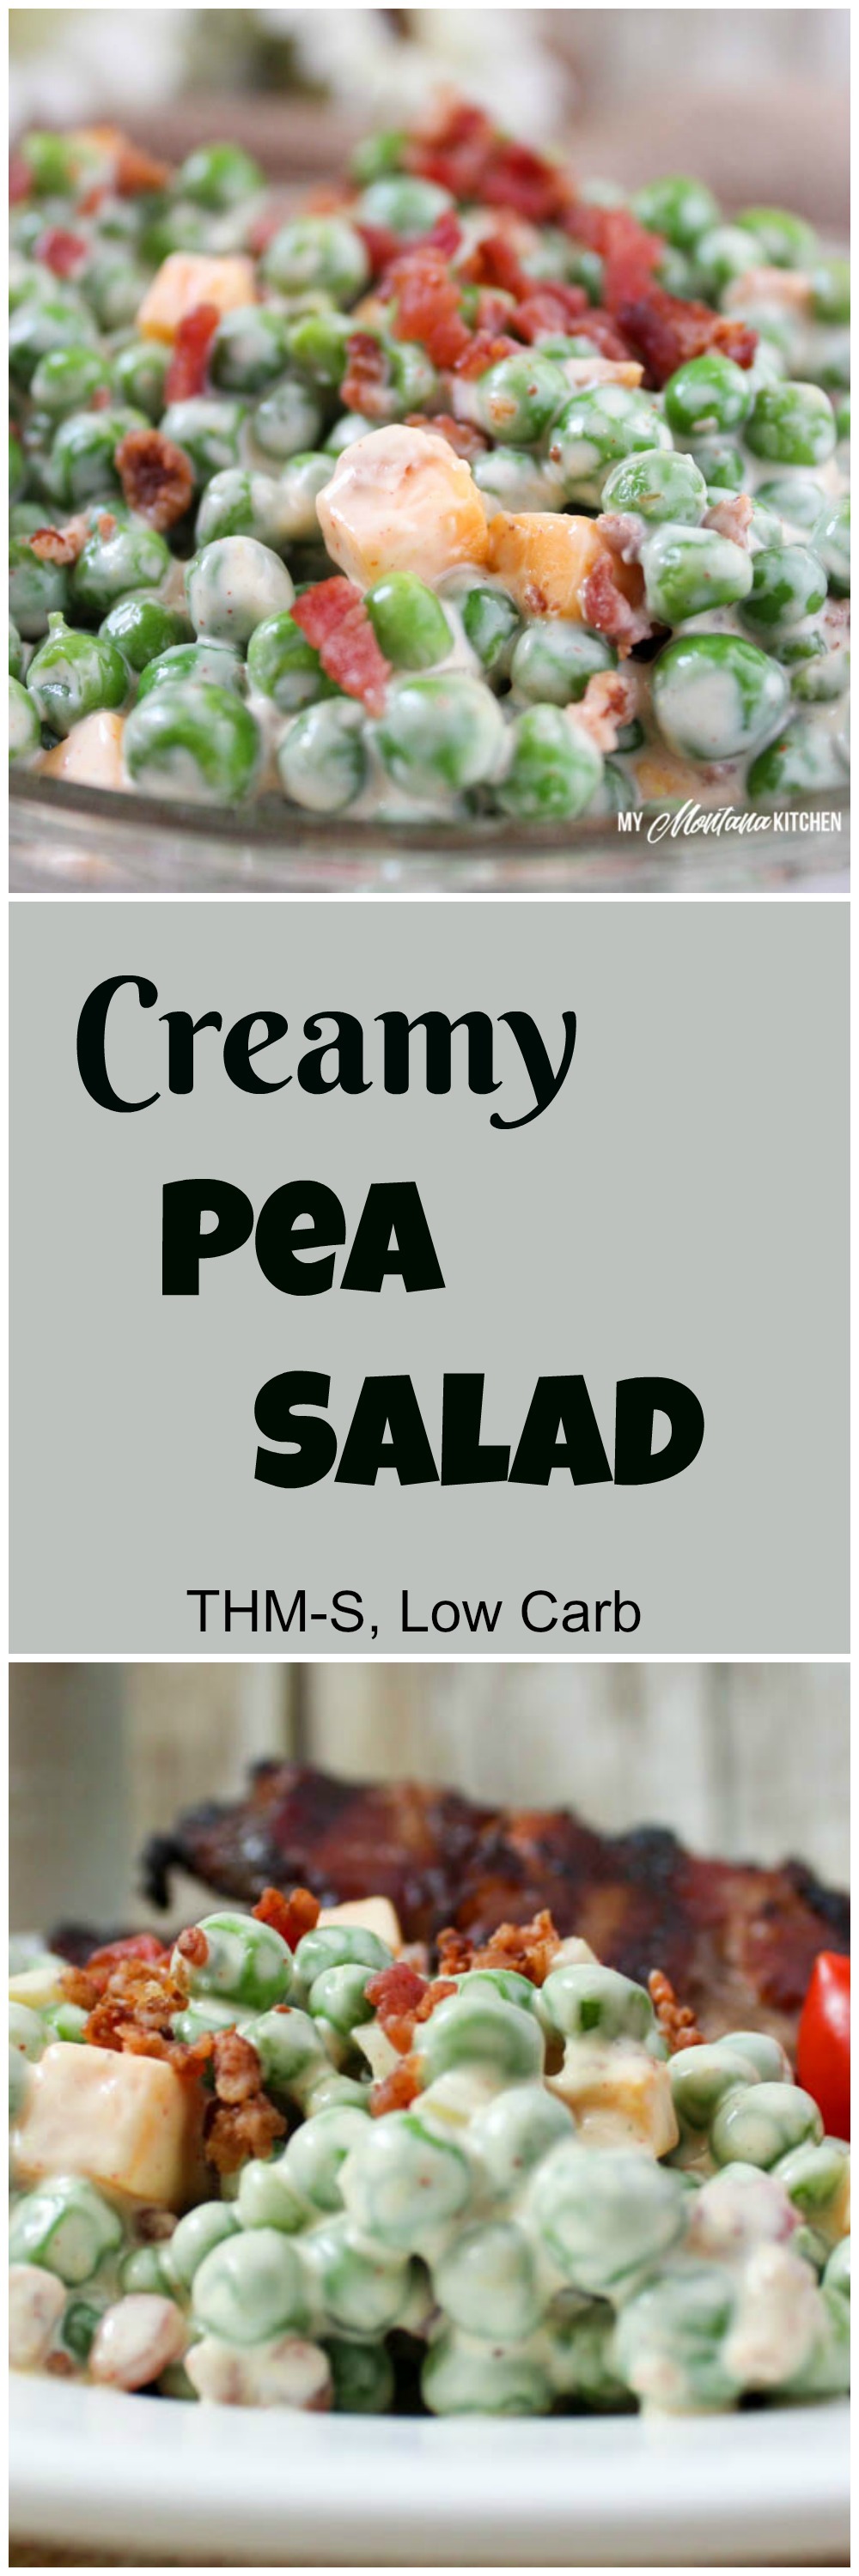 Creamy Pea Salad (THM-S, Low Carb)